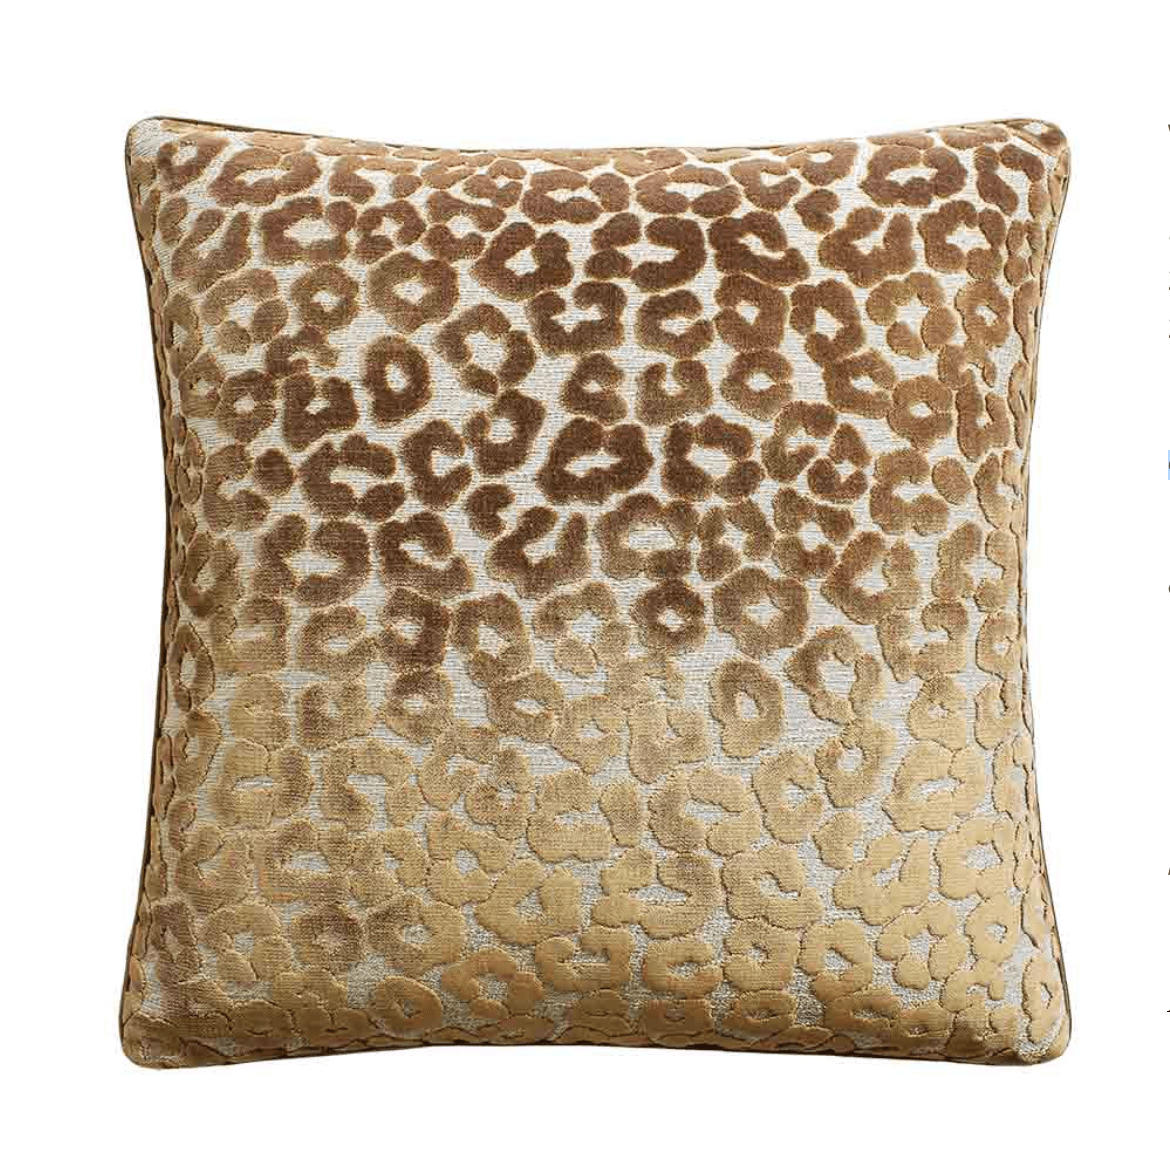 Ryan Studio Wild Cat Pillow in Ginger Pillows